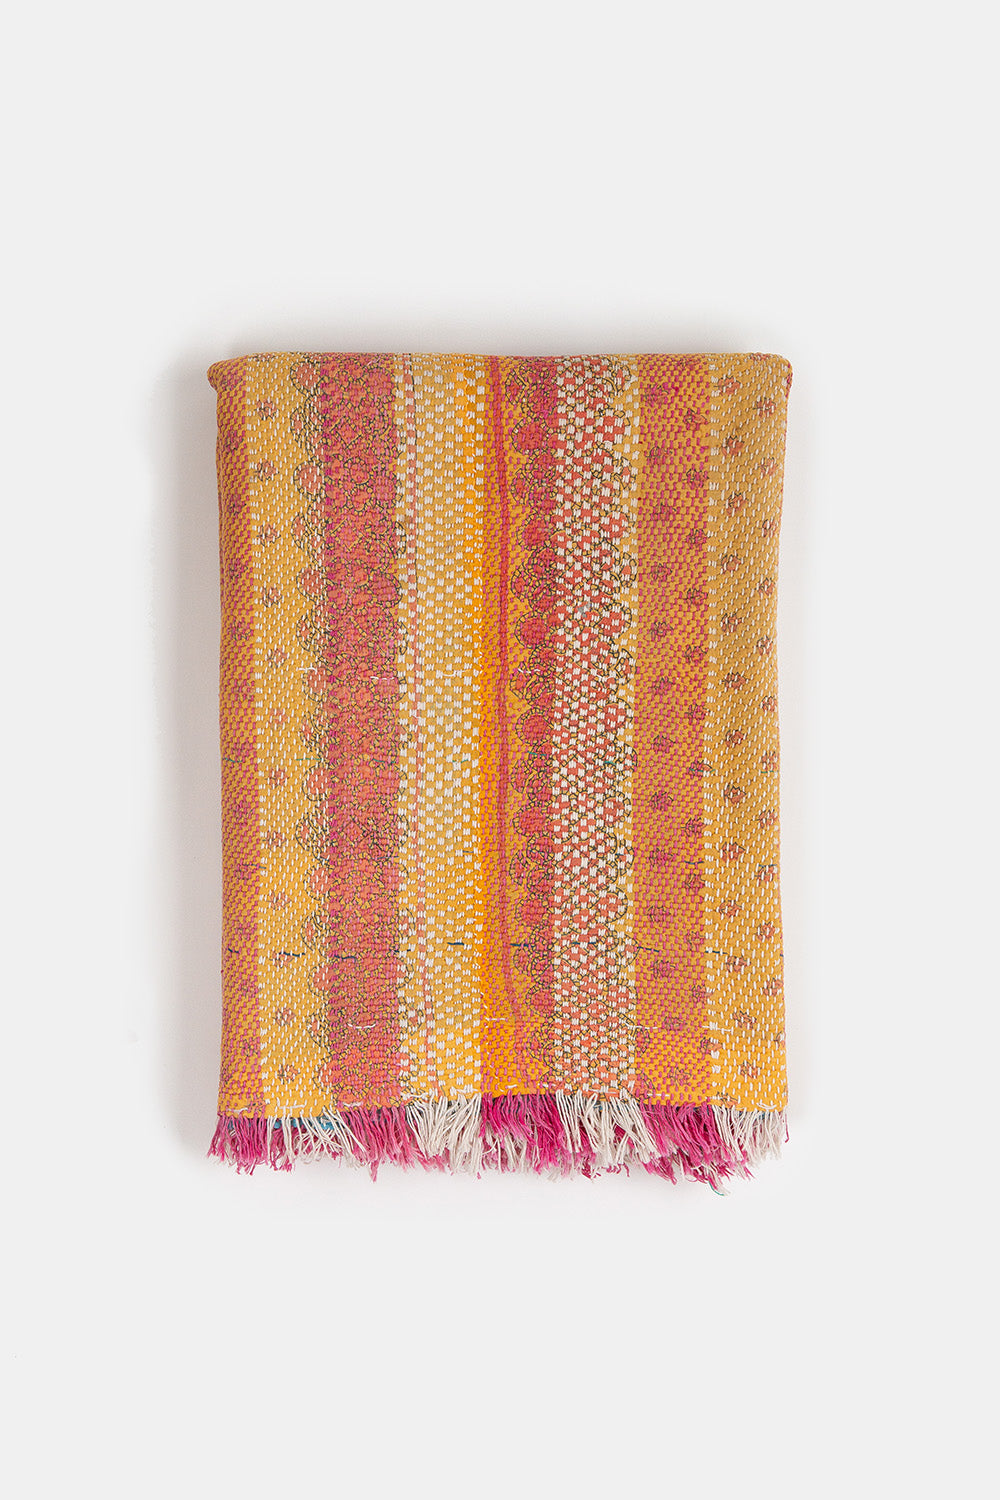 Vintage Kantha Quilt in Orange Stripe